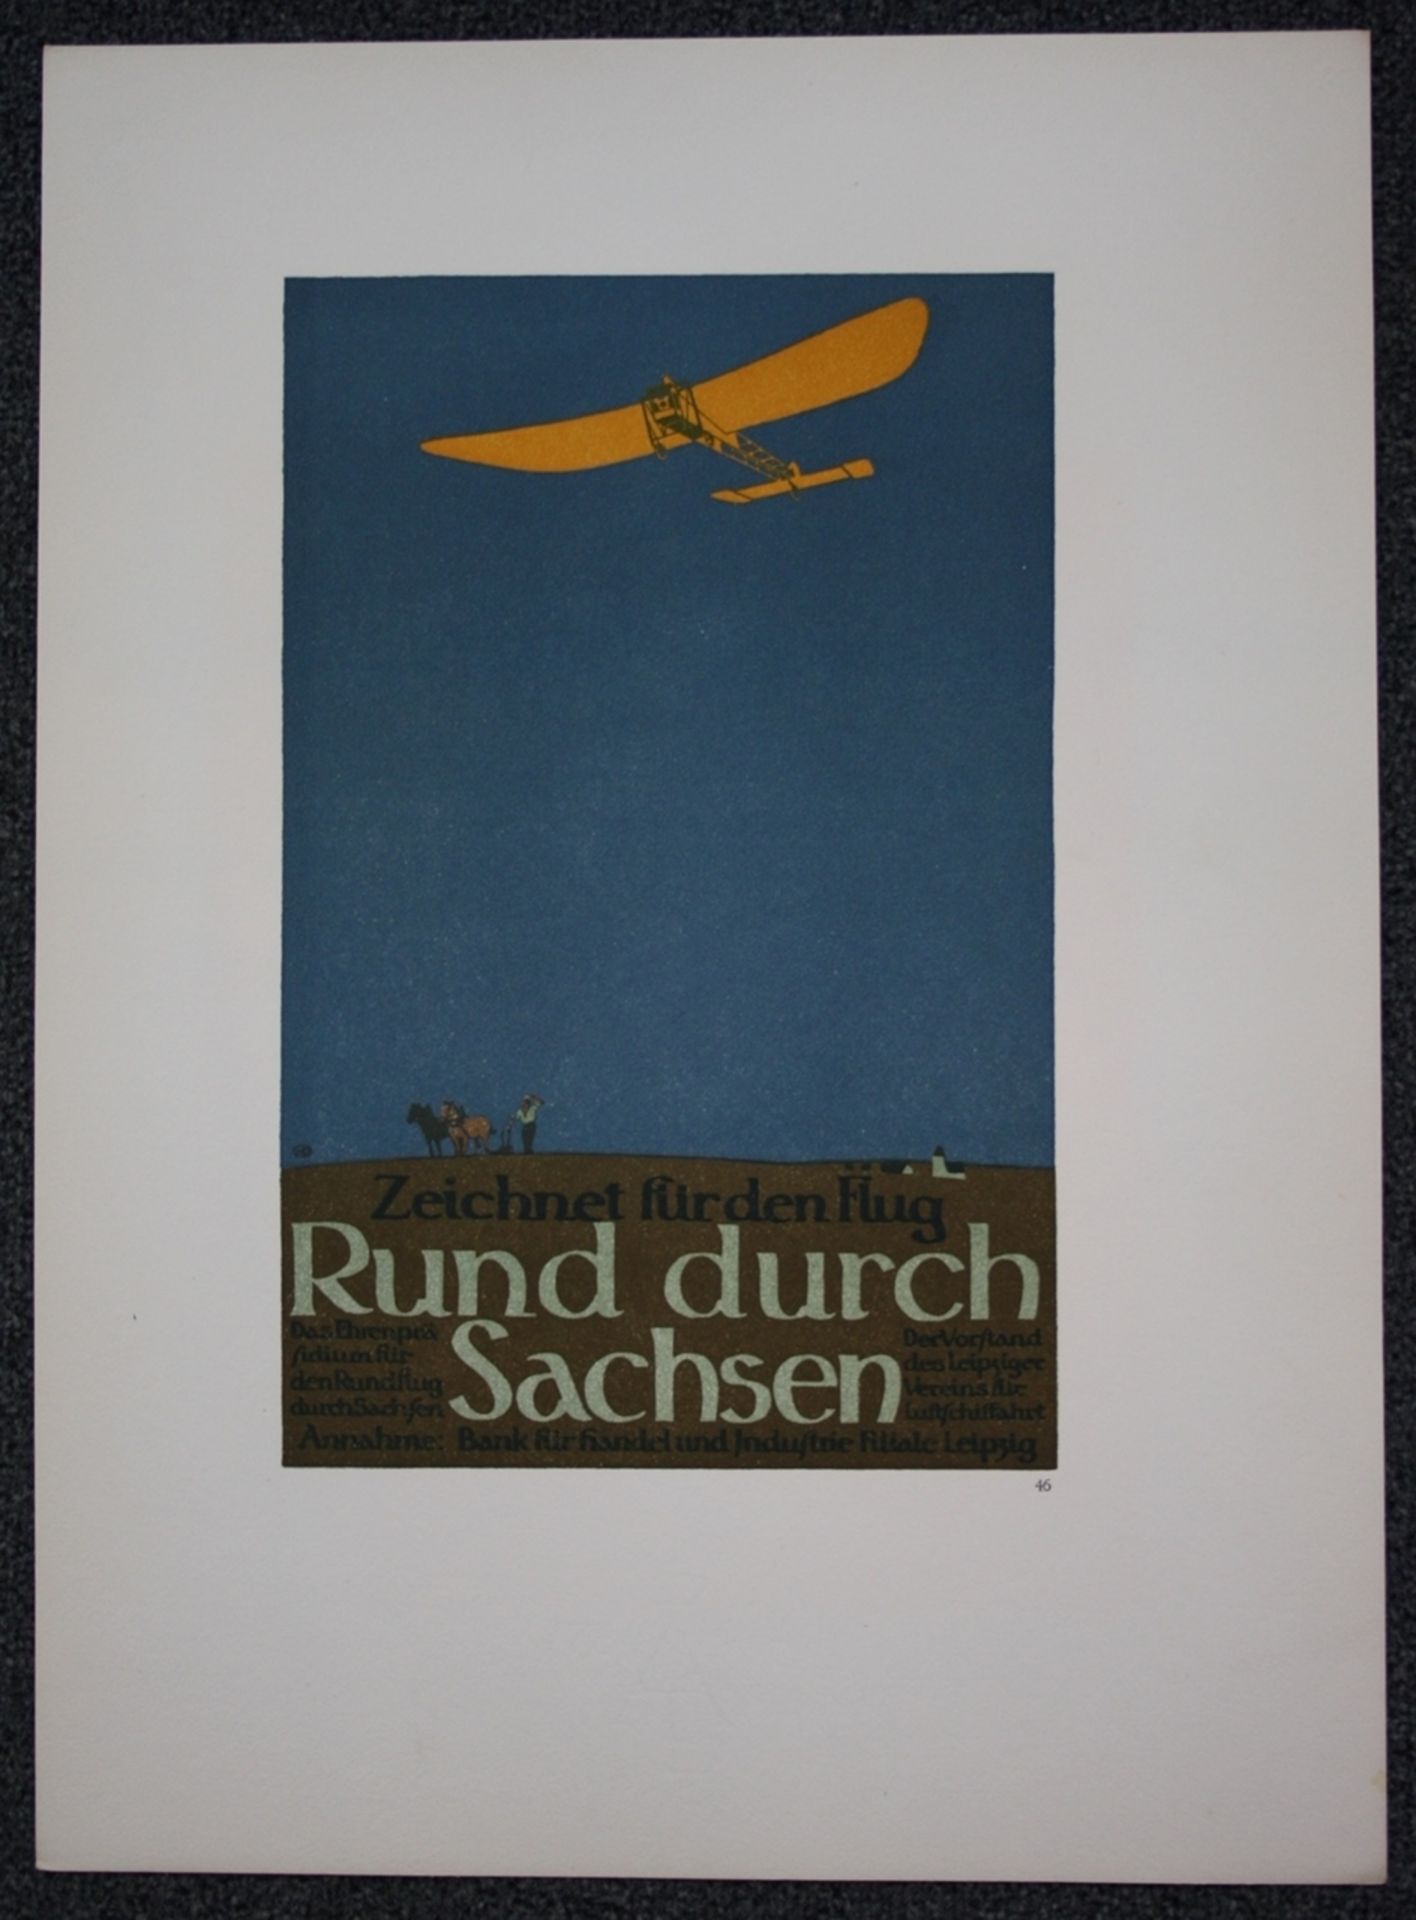 Festschrift Bugra Leipzig 1914 - Image 8 of 8